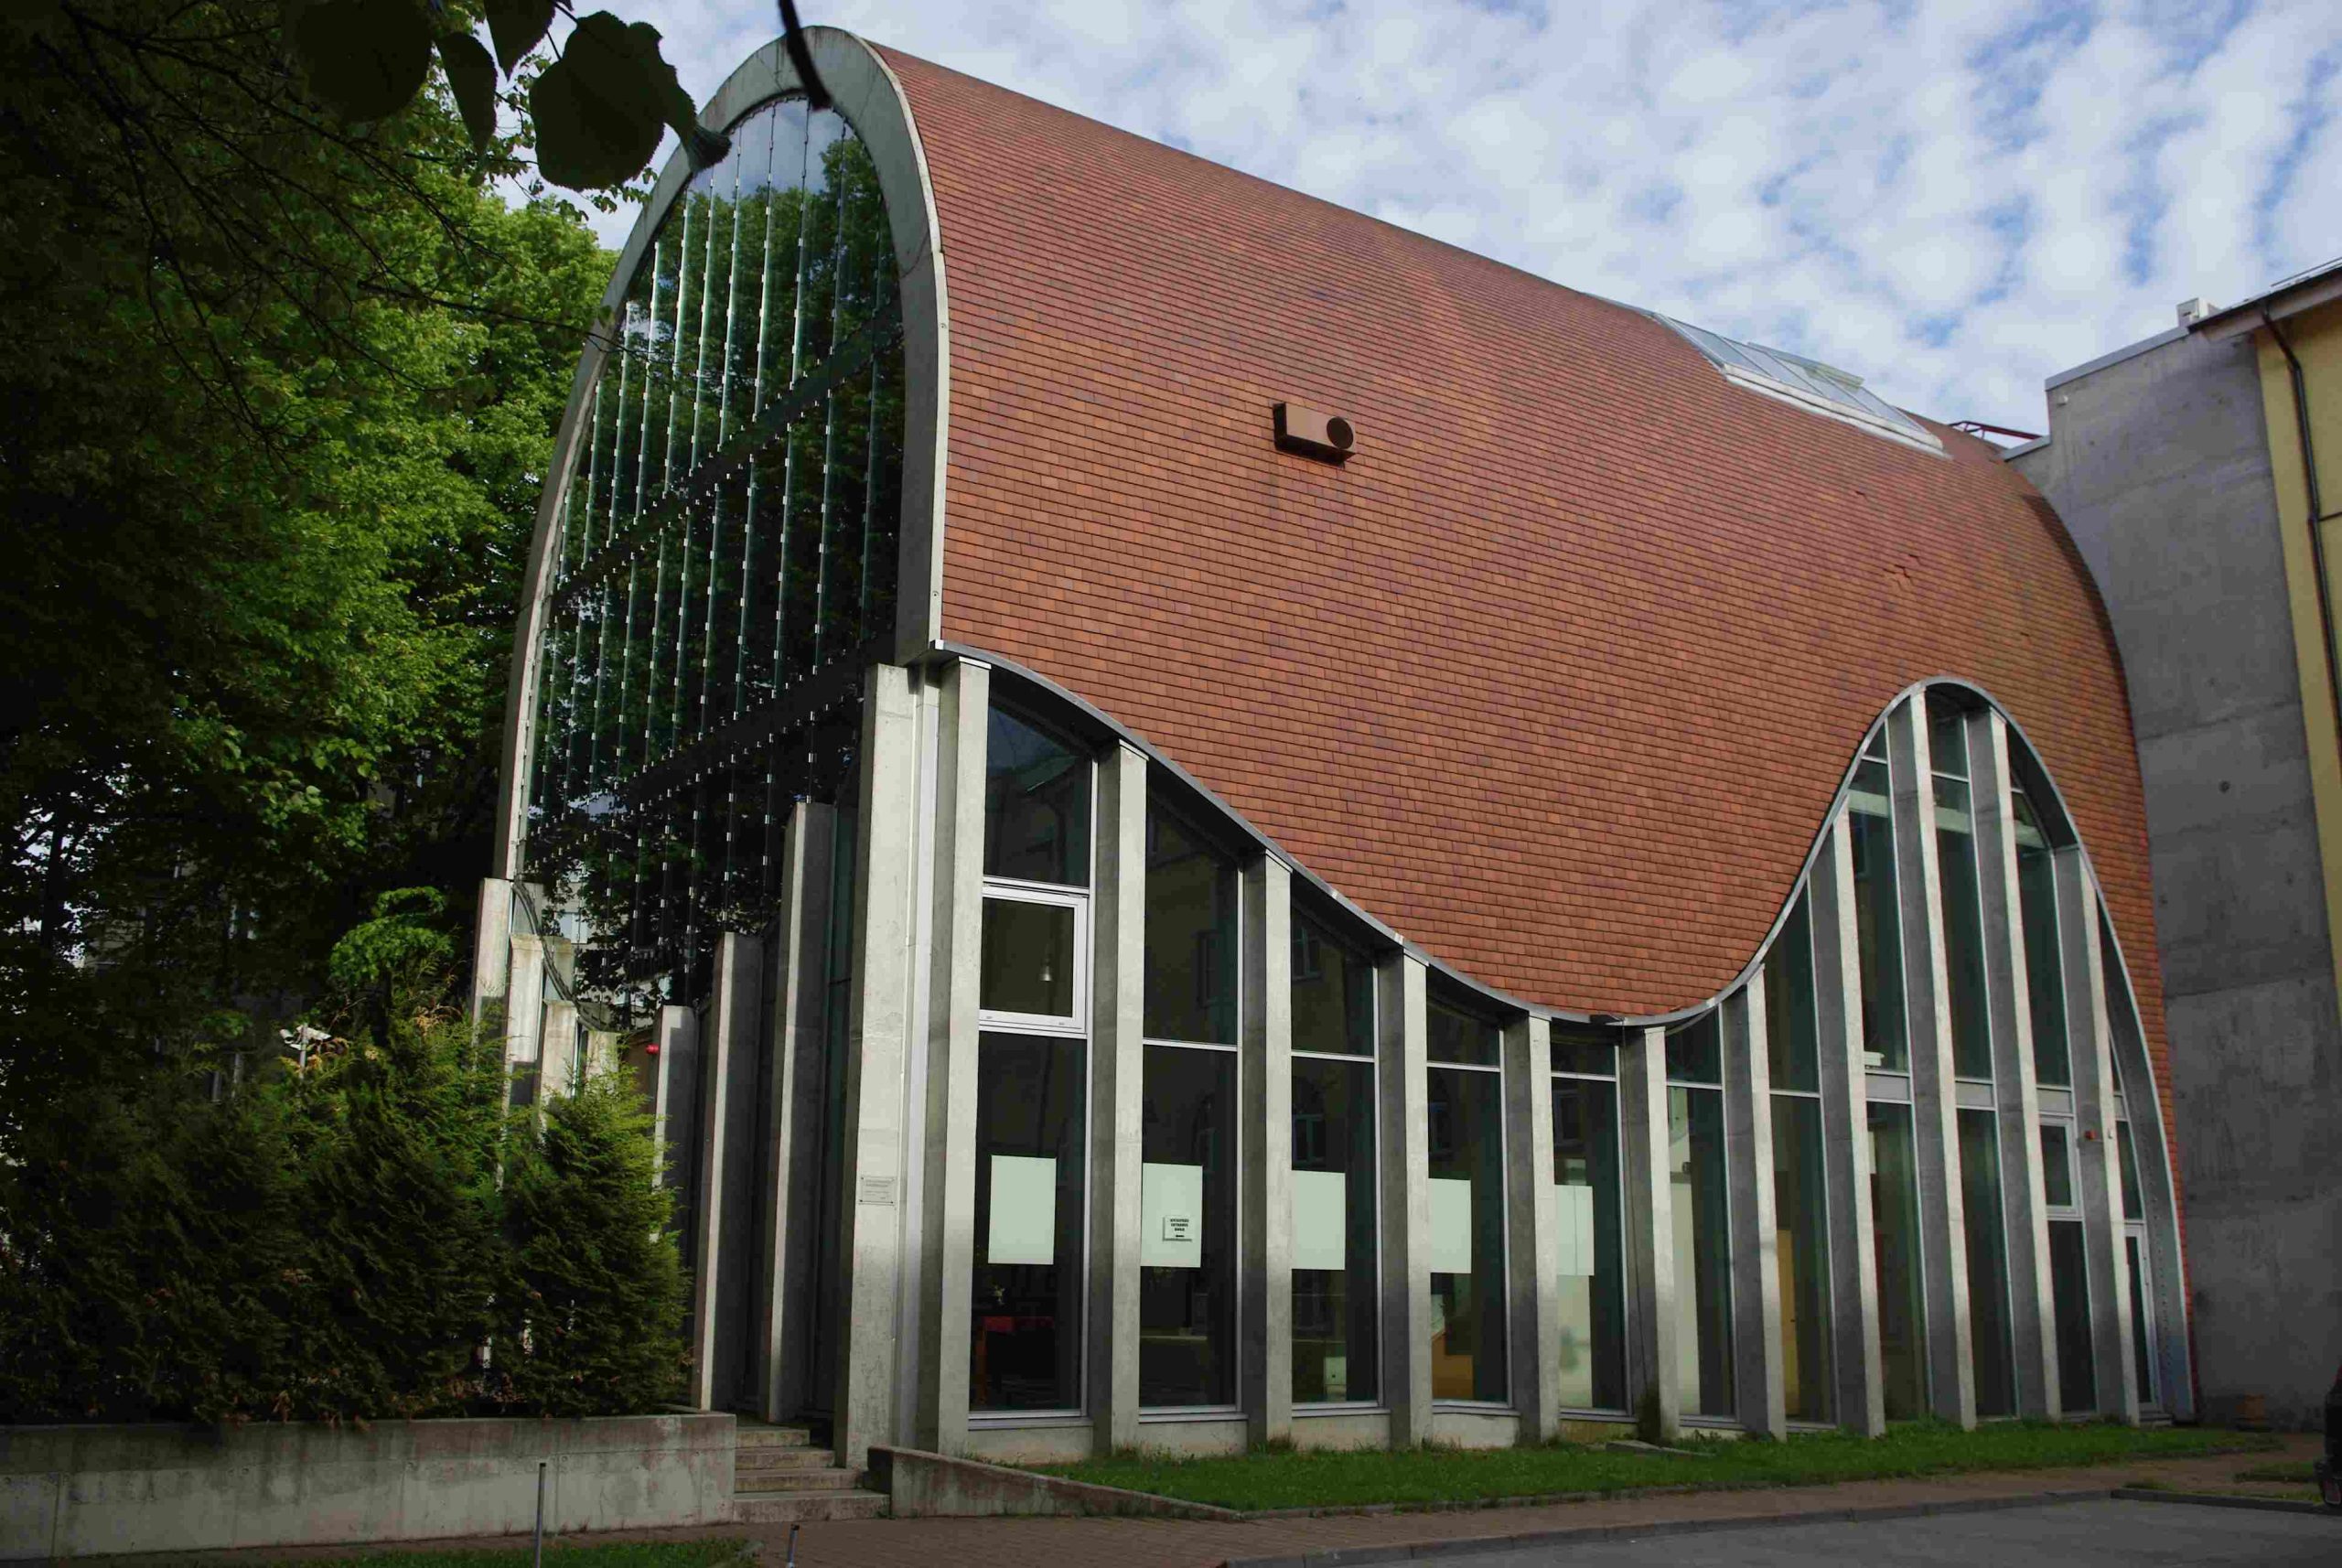 Sinagoga di Tallinn, in Estonia